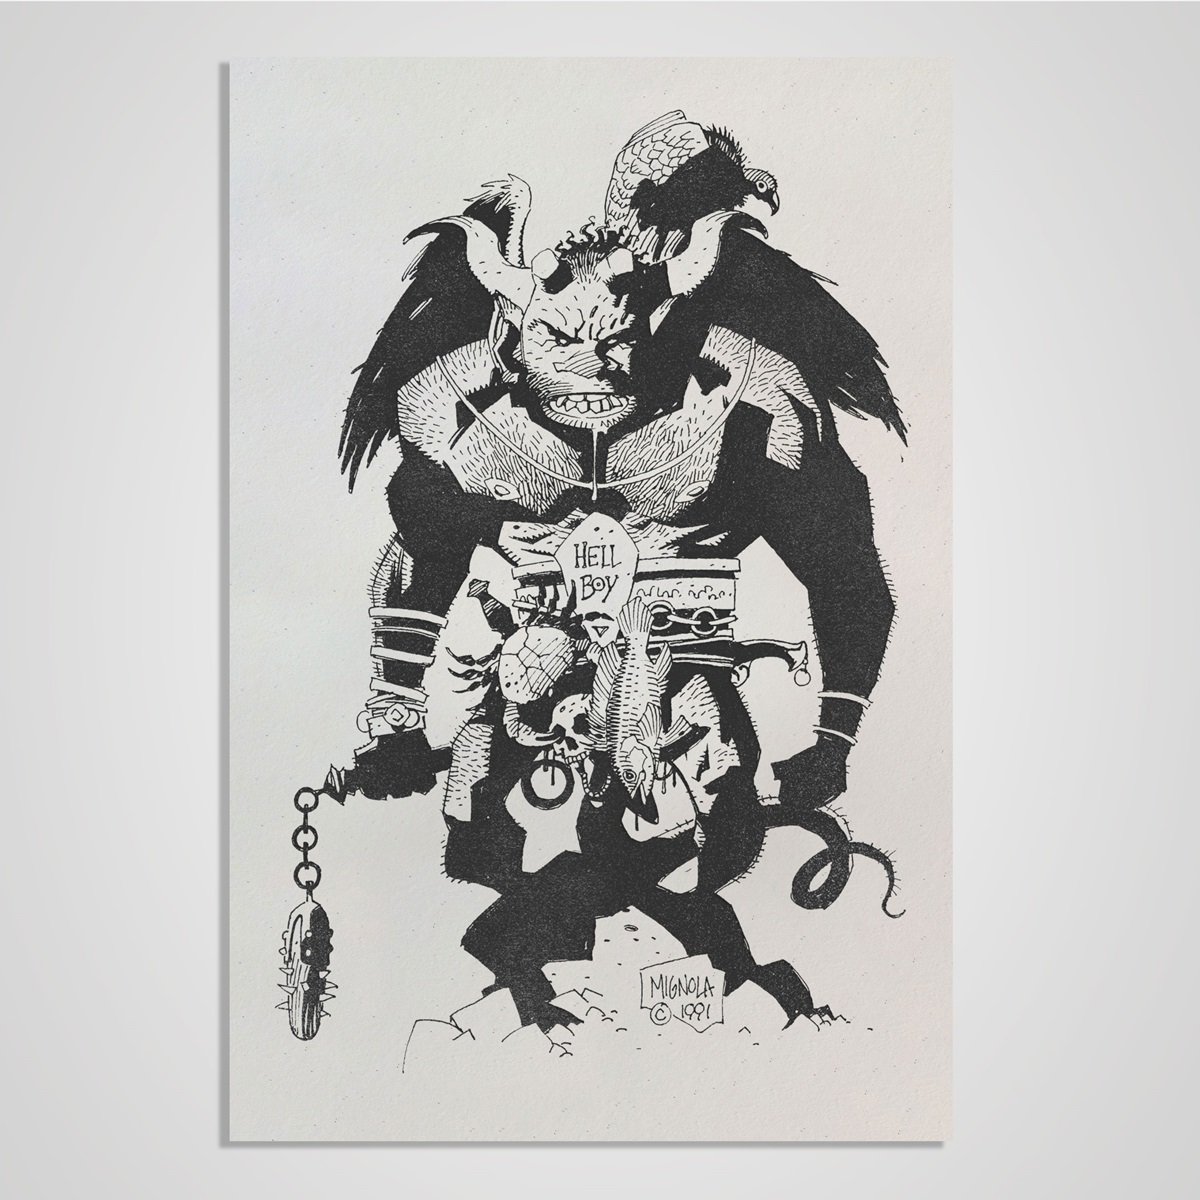 Hellboy Letterpress image from artist Mike Mignola.